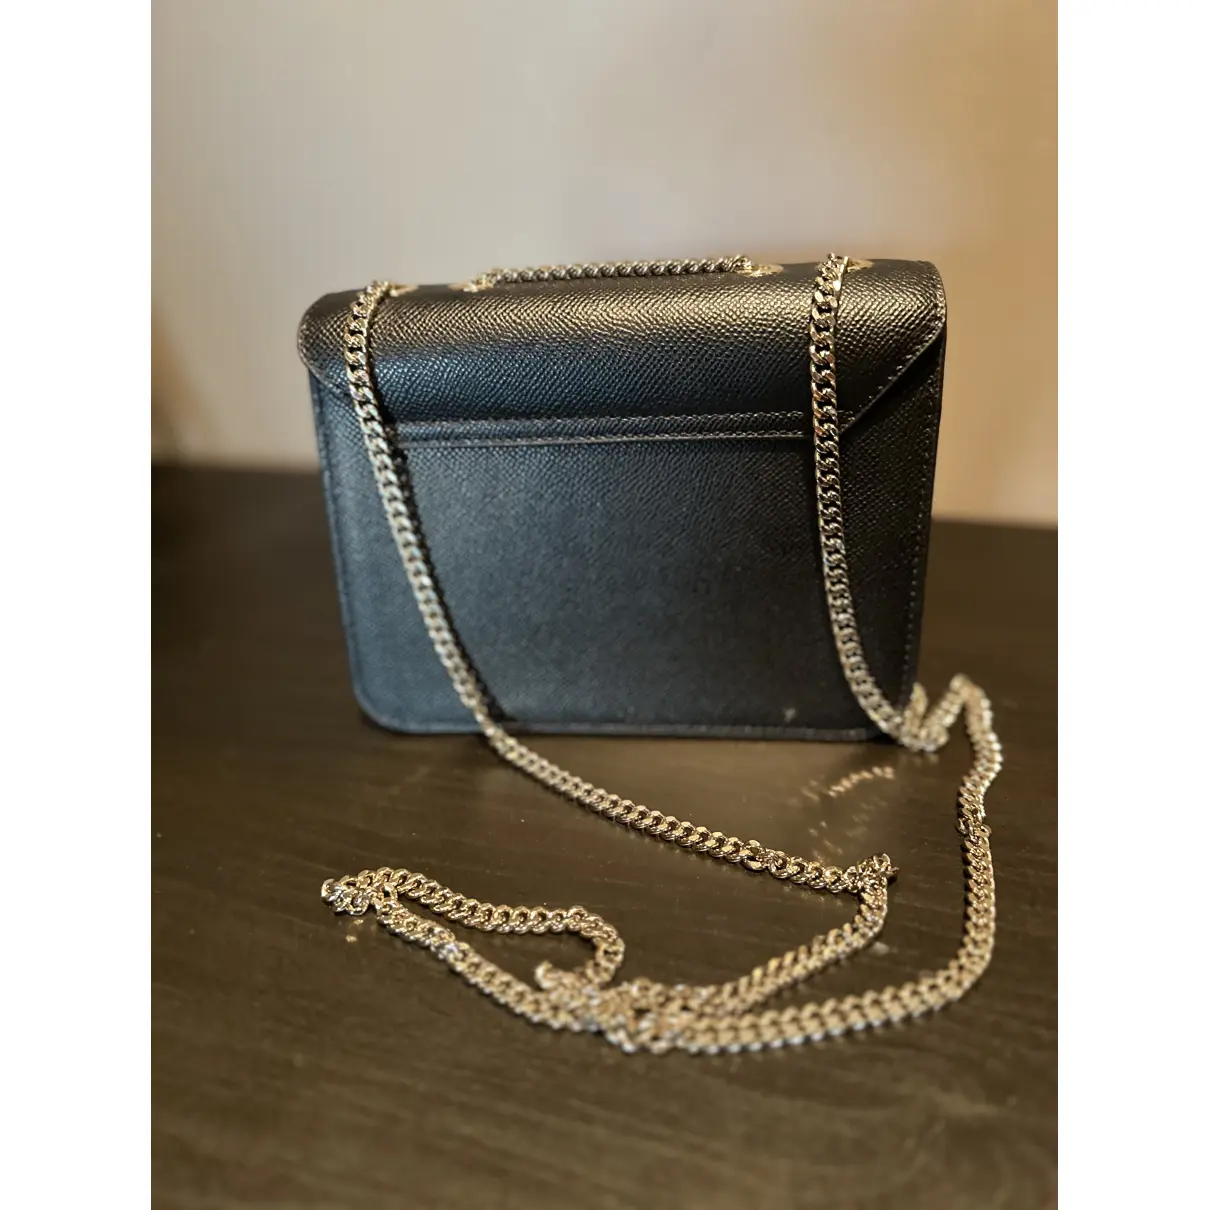 Buy Furla Metropolis leather clutch bag online